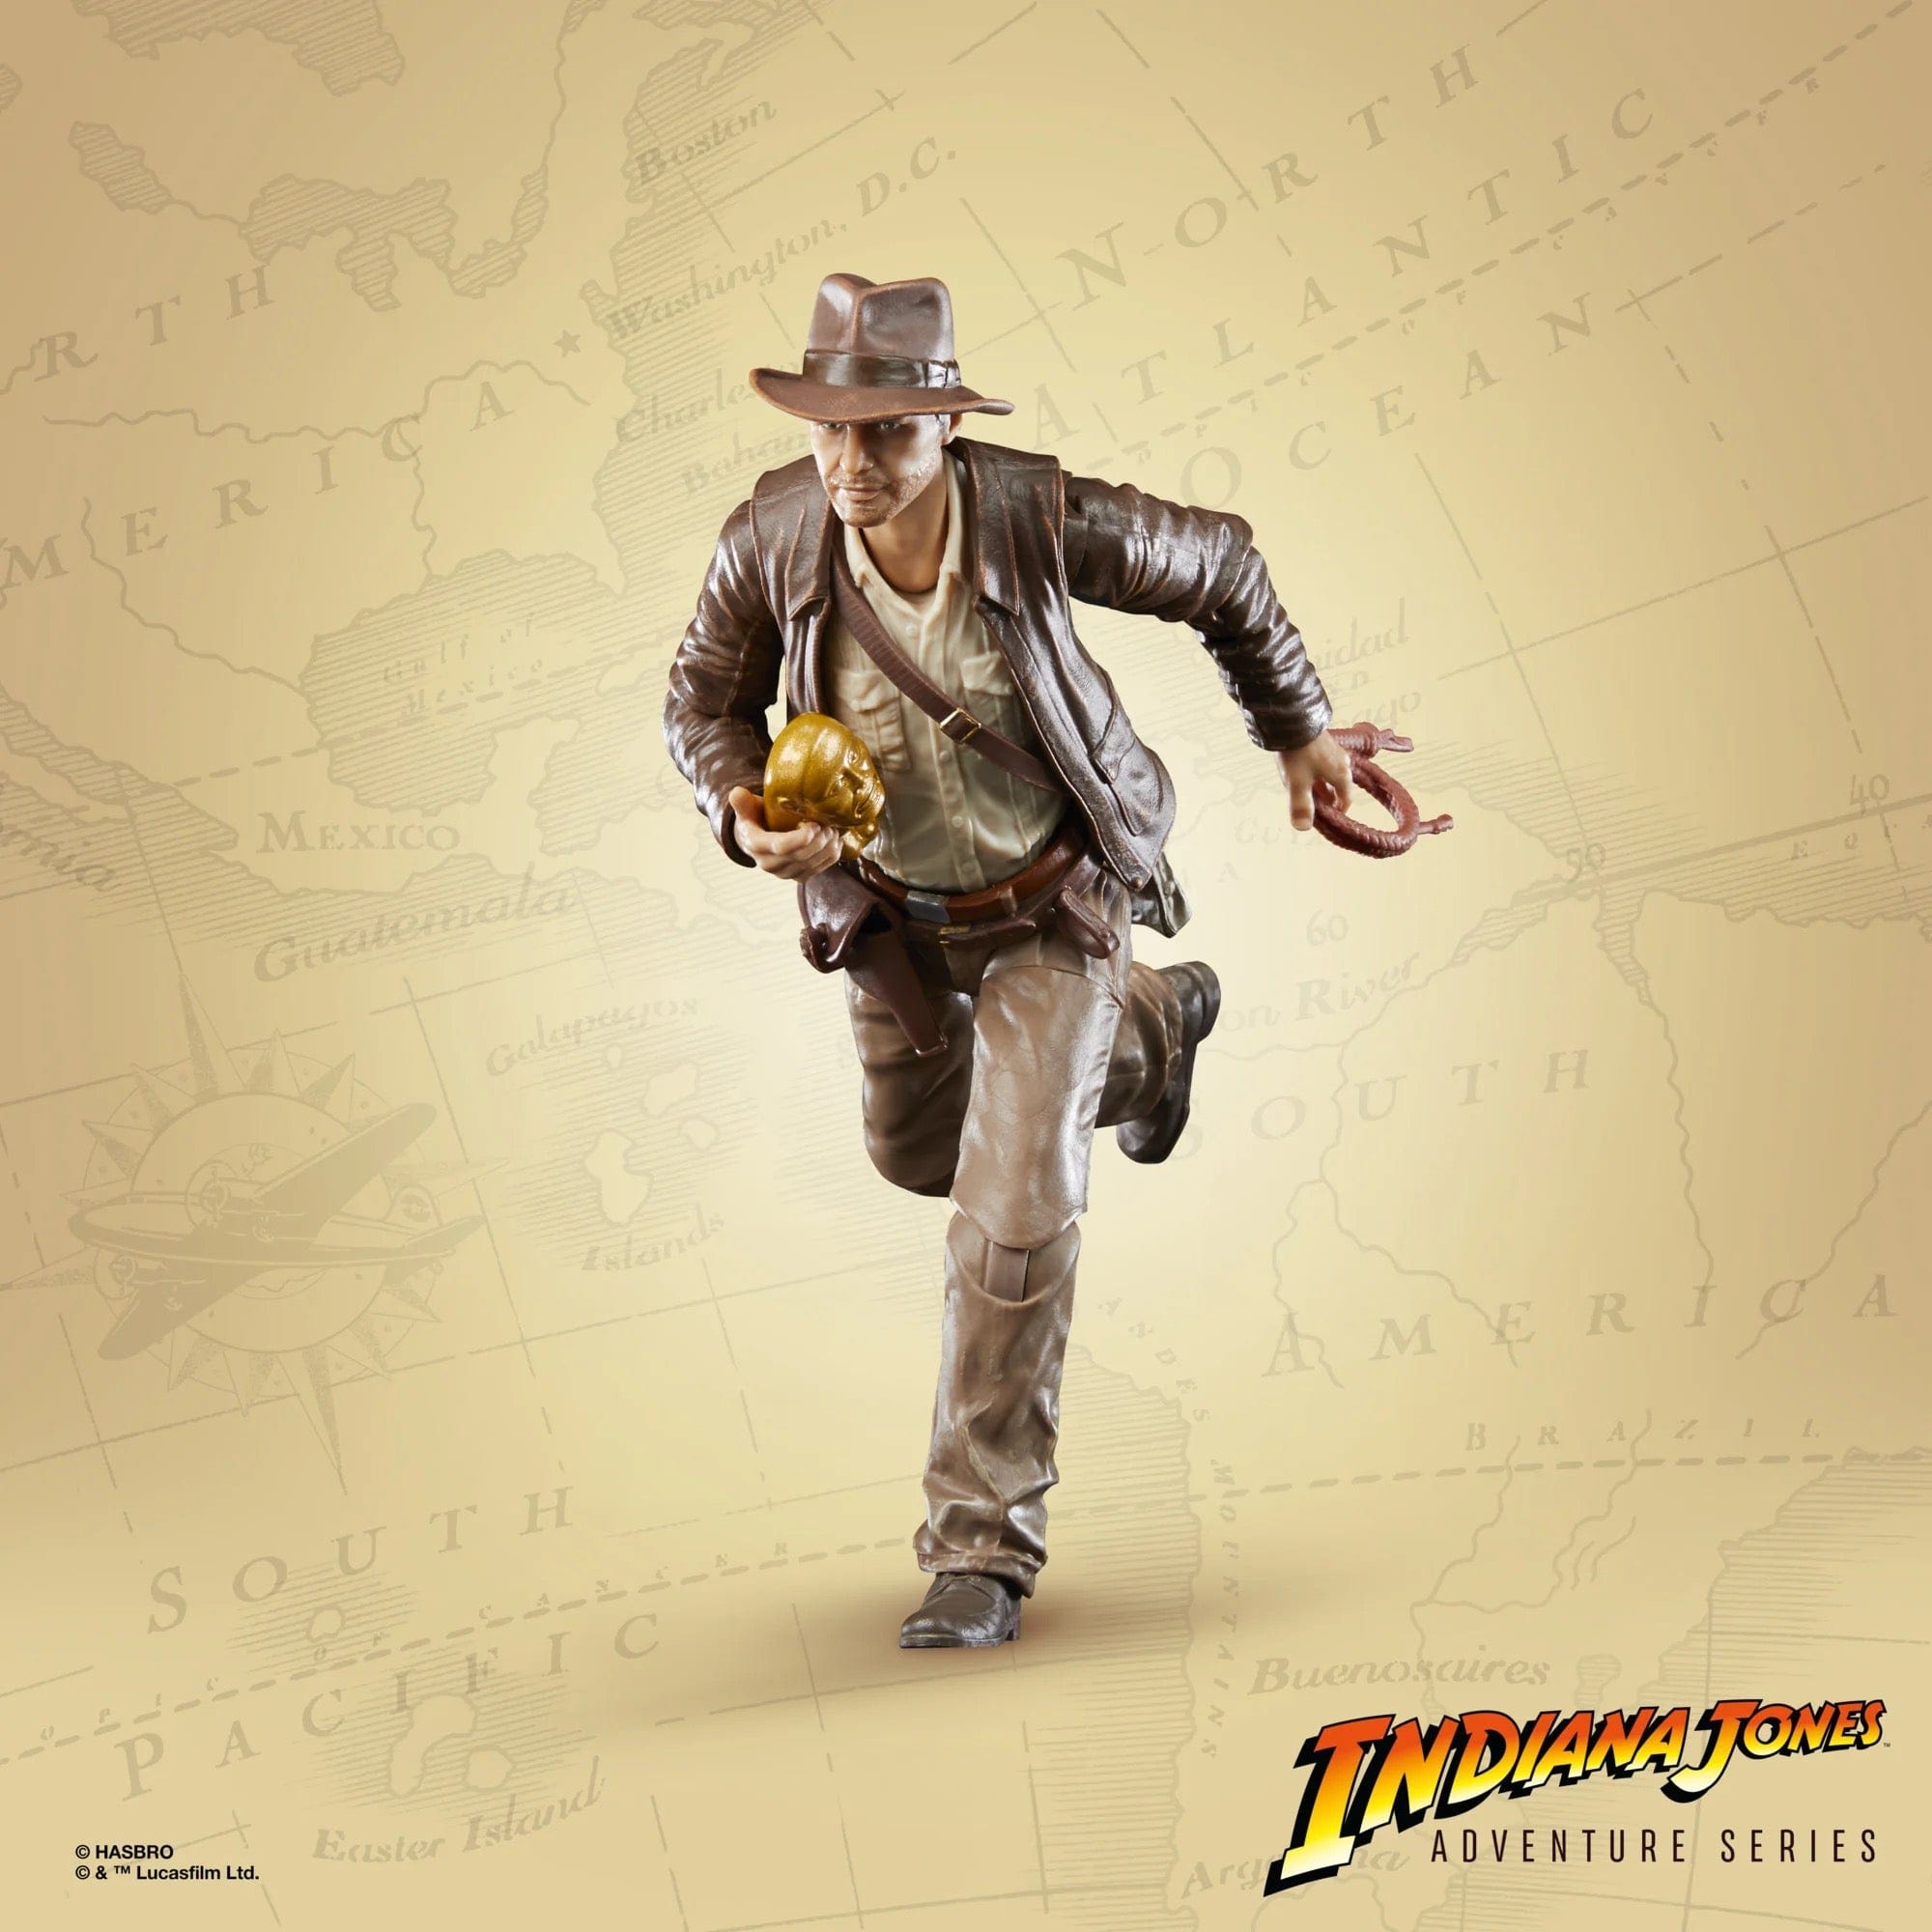 Hasbro Indiana Jones Adventure Series Indiana Jones (Raiders of the Last Ark) Action Figure